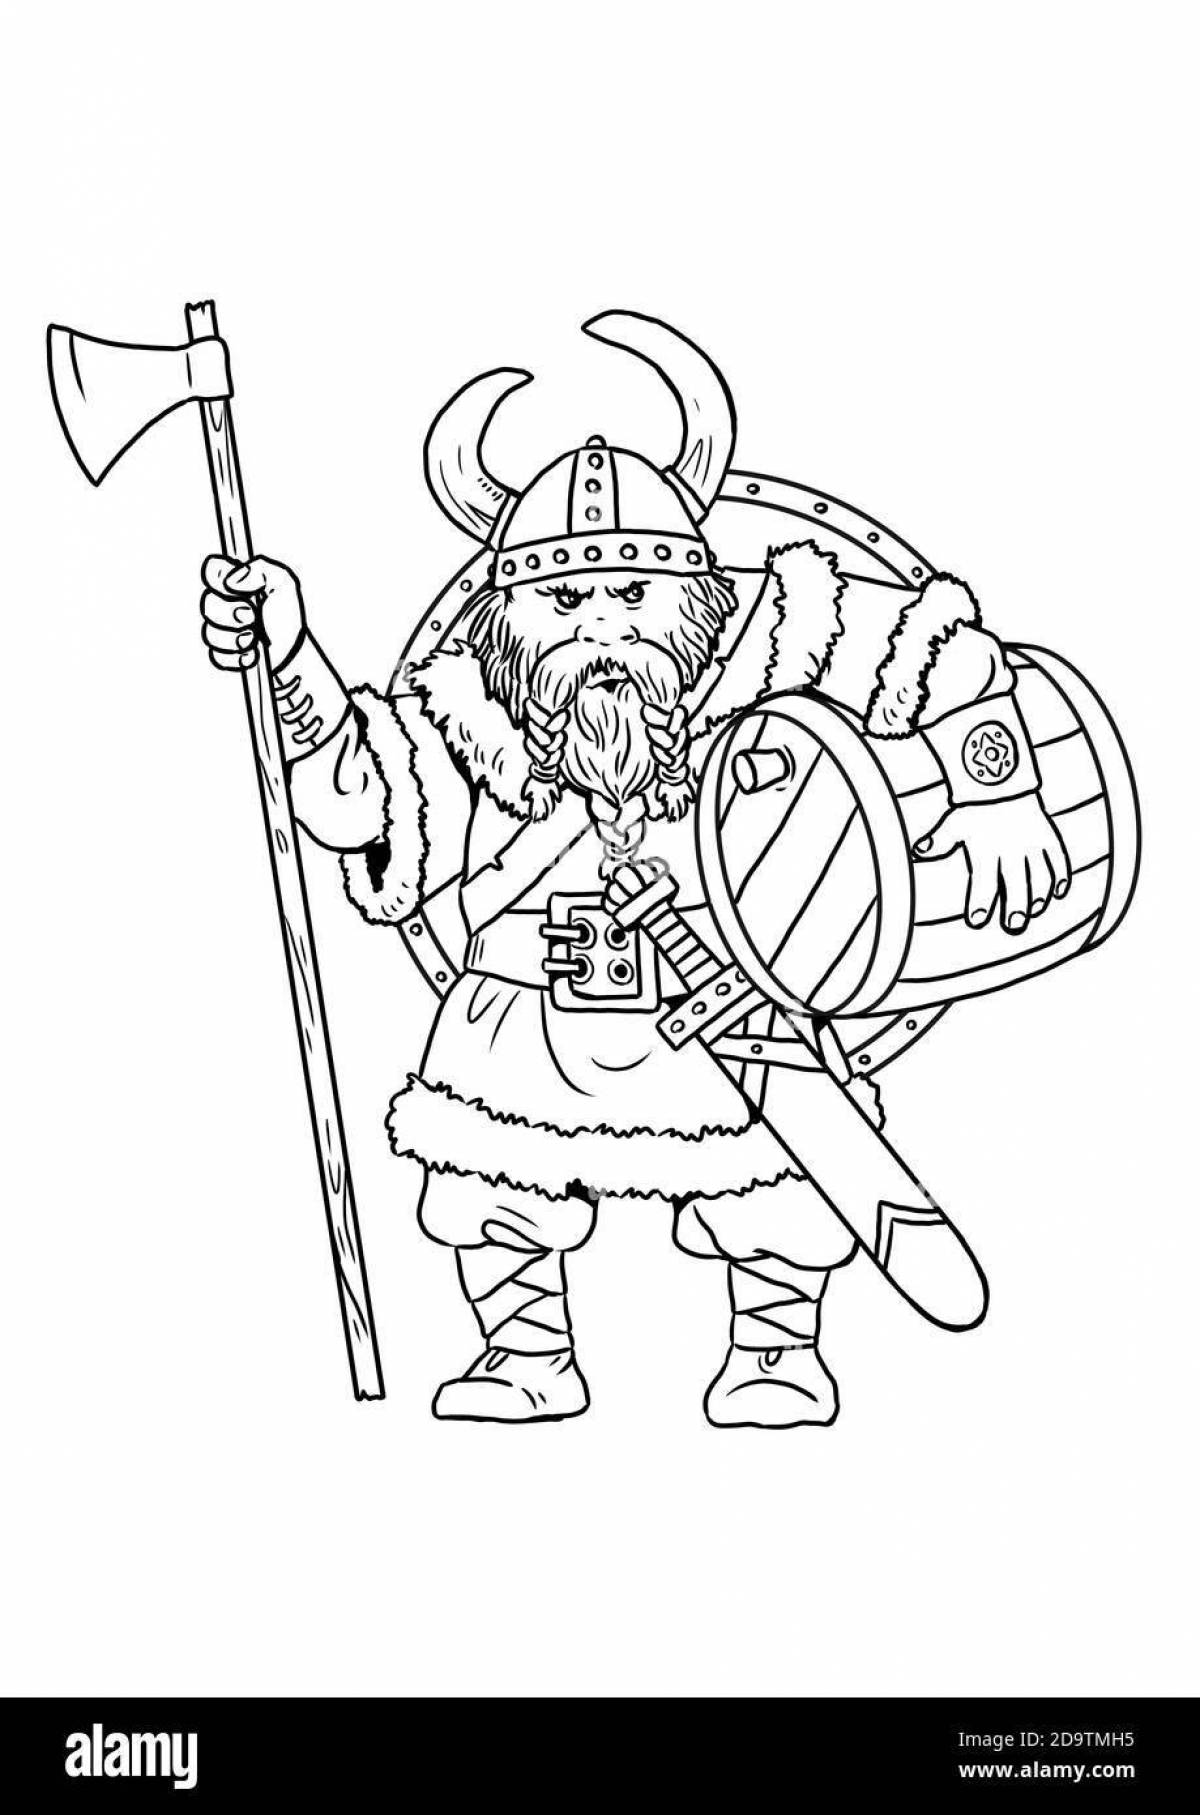 Viking dominant face coloring book